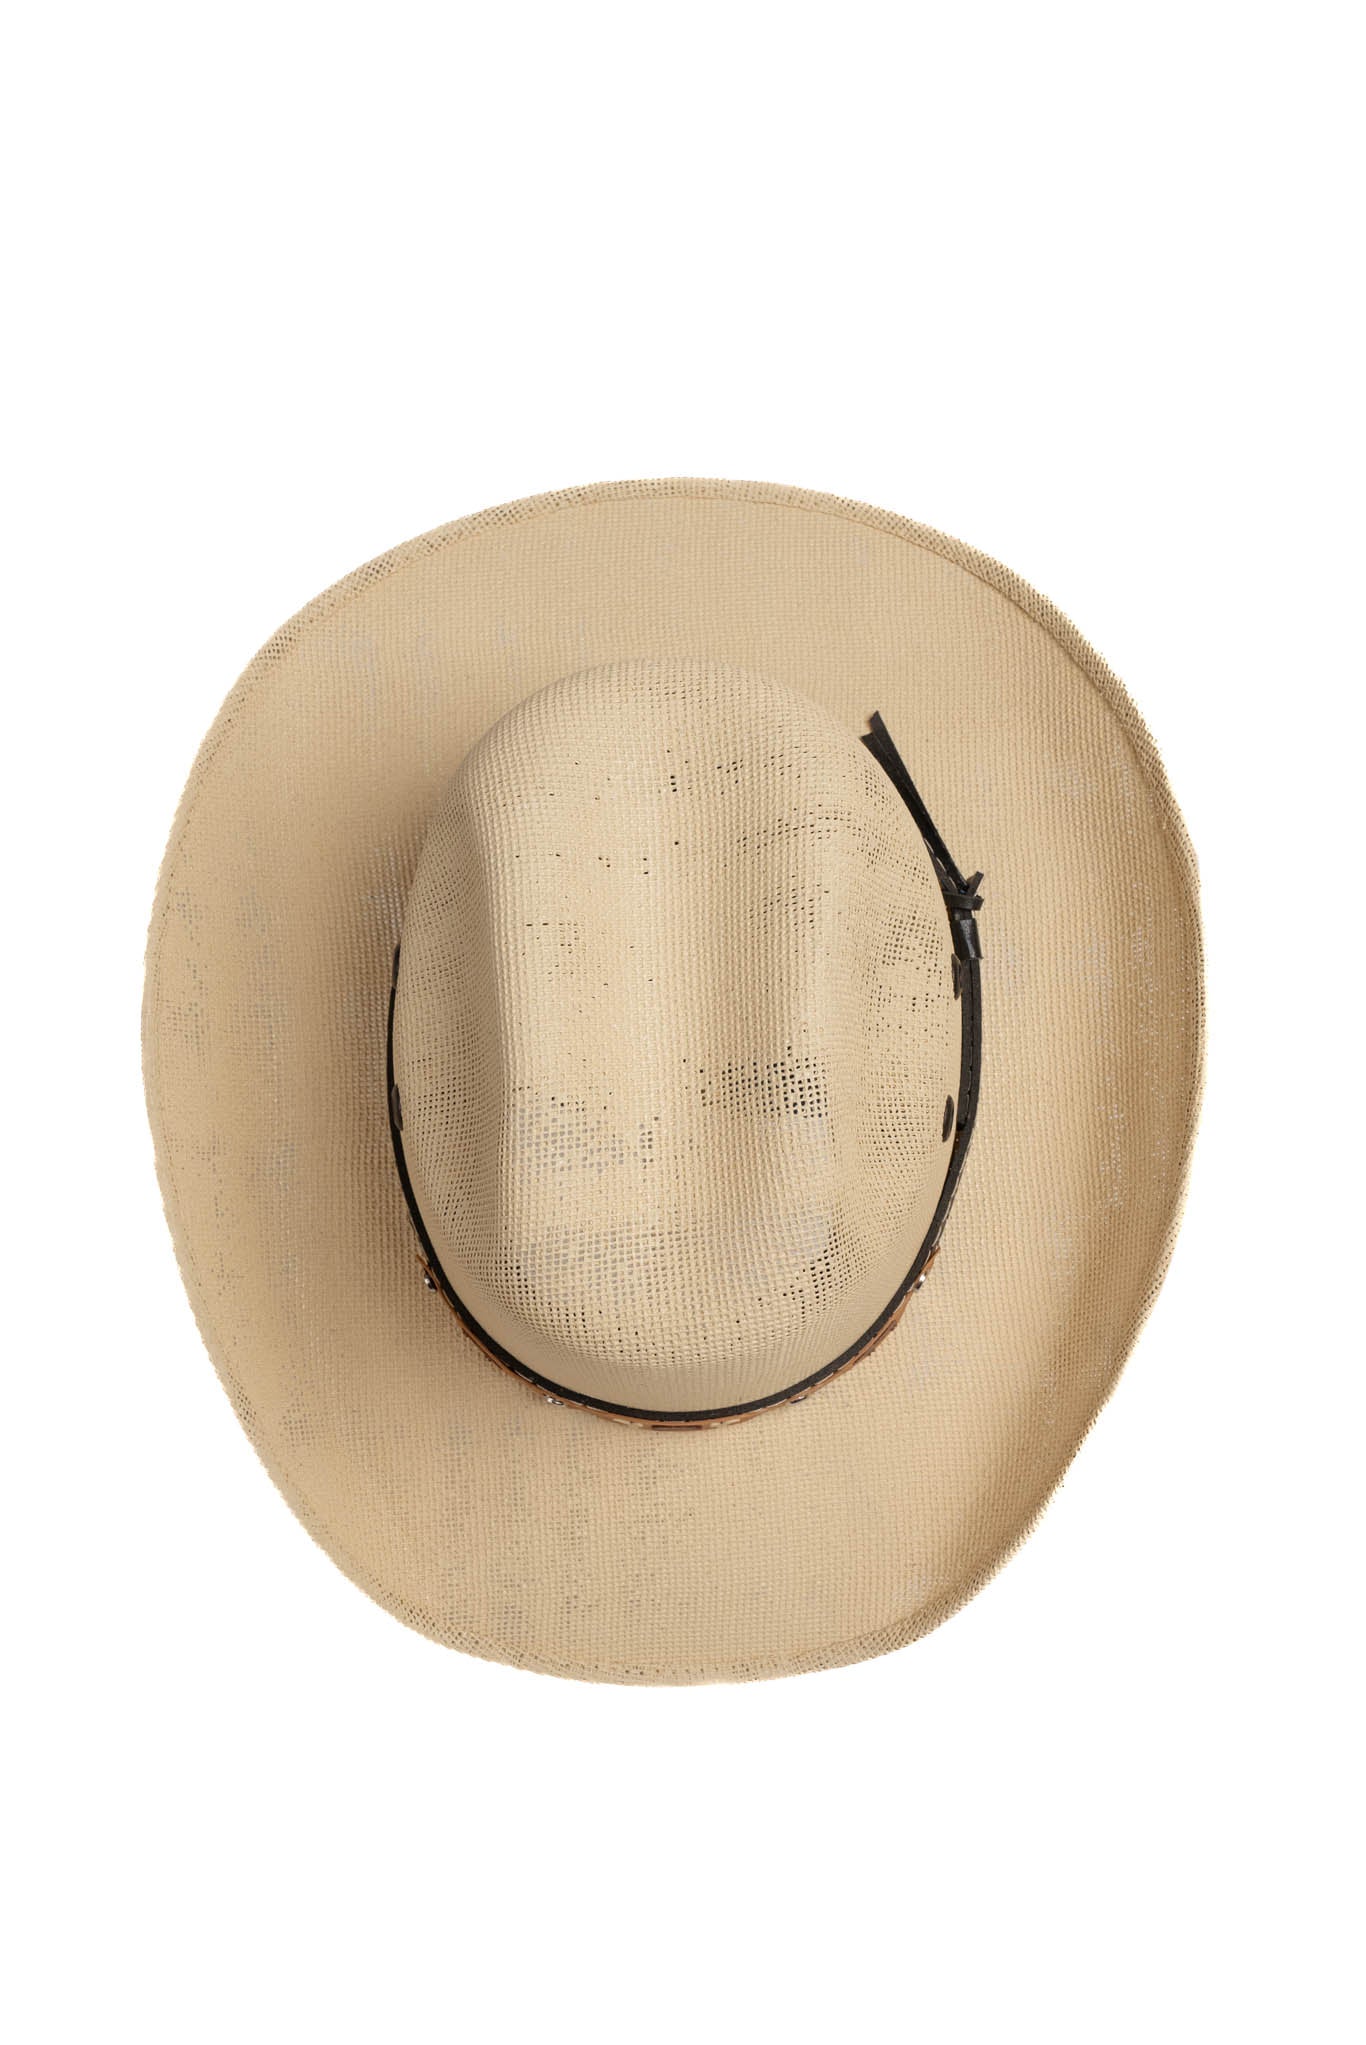 Rancho Grande Kids Rancher Hat